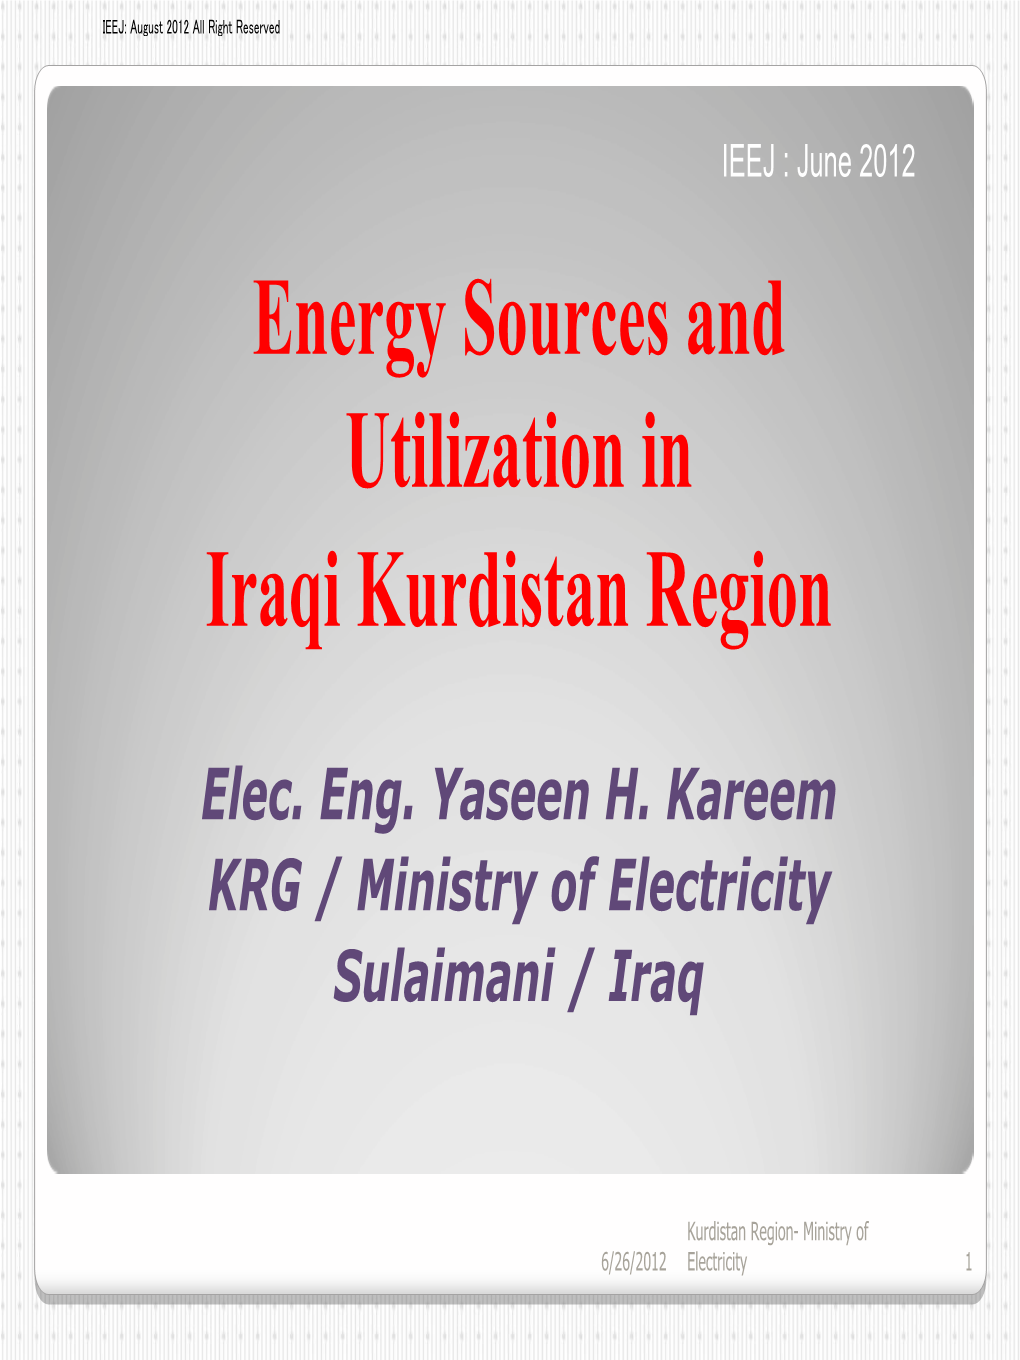 Energy Sources and Utilization in Iraqi Kurdistan Region